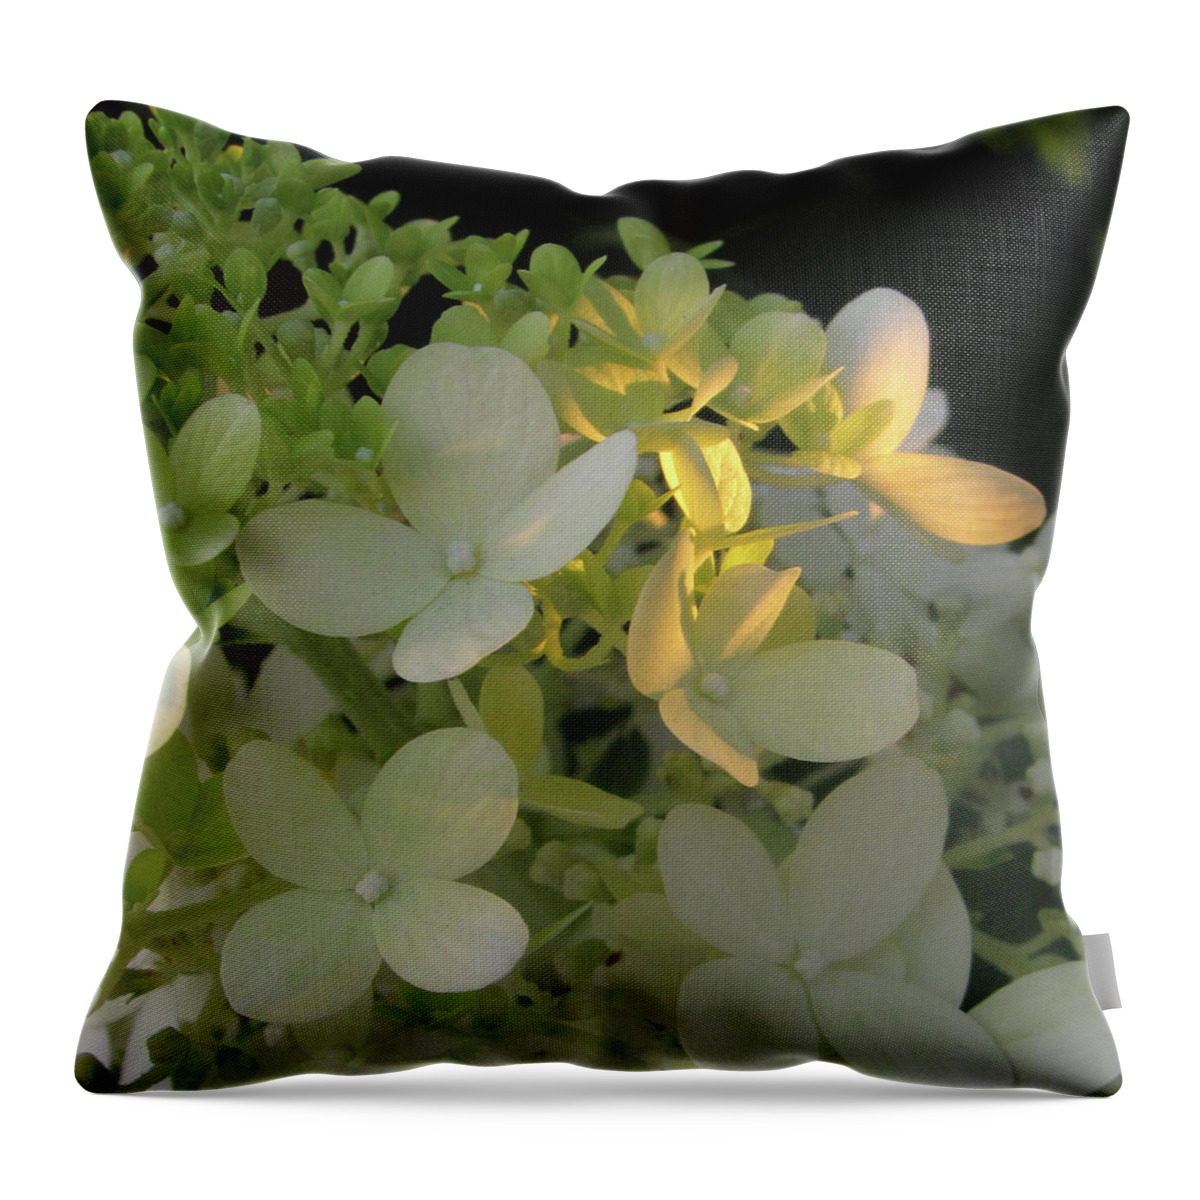 Hydrangea Throw Pillow featuring the digital art Hydrangea in Sunlight by Nancy Olivia Hoffmann